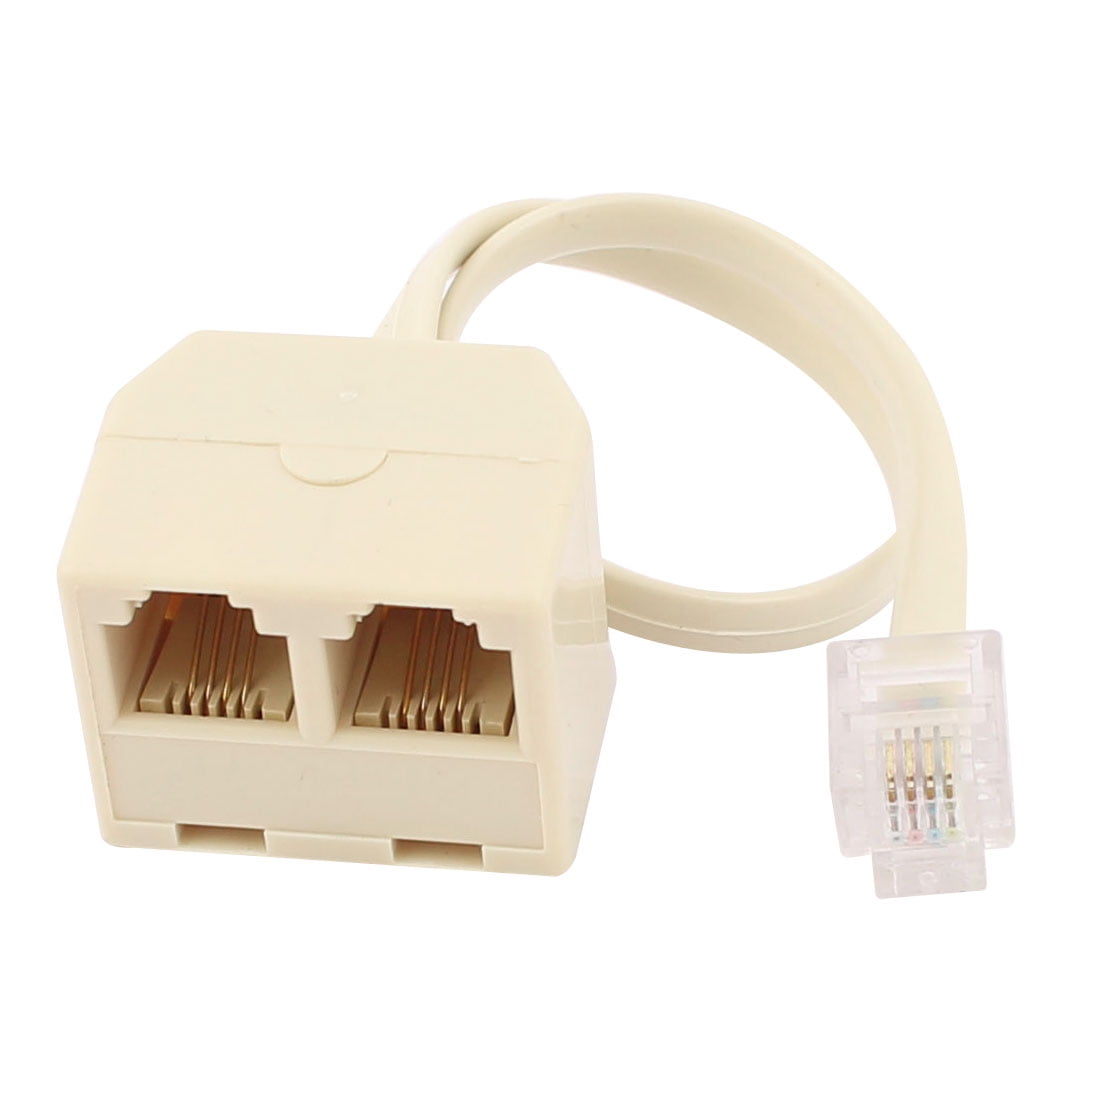 5 Way Telephone Phone Jack Line Plug Outlet Socket Splitter Adapter 